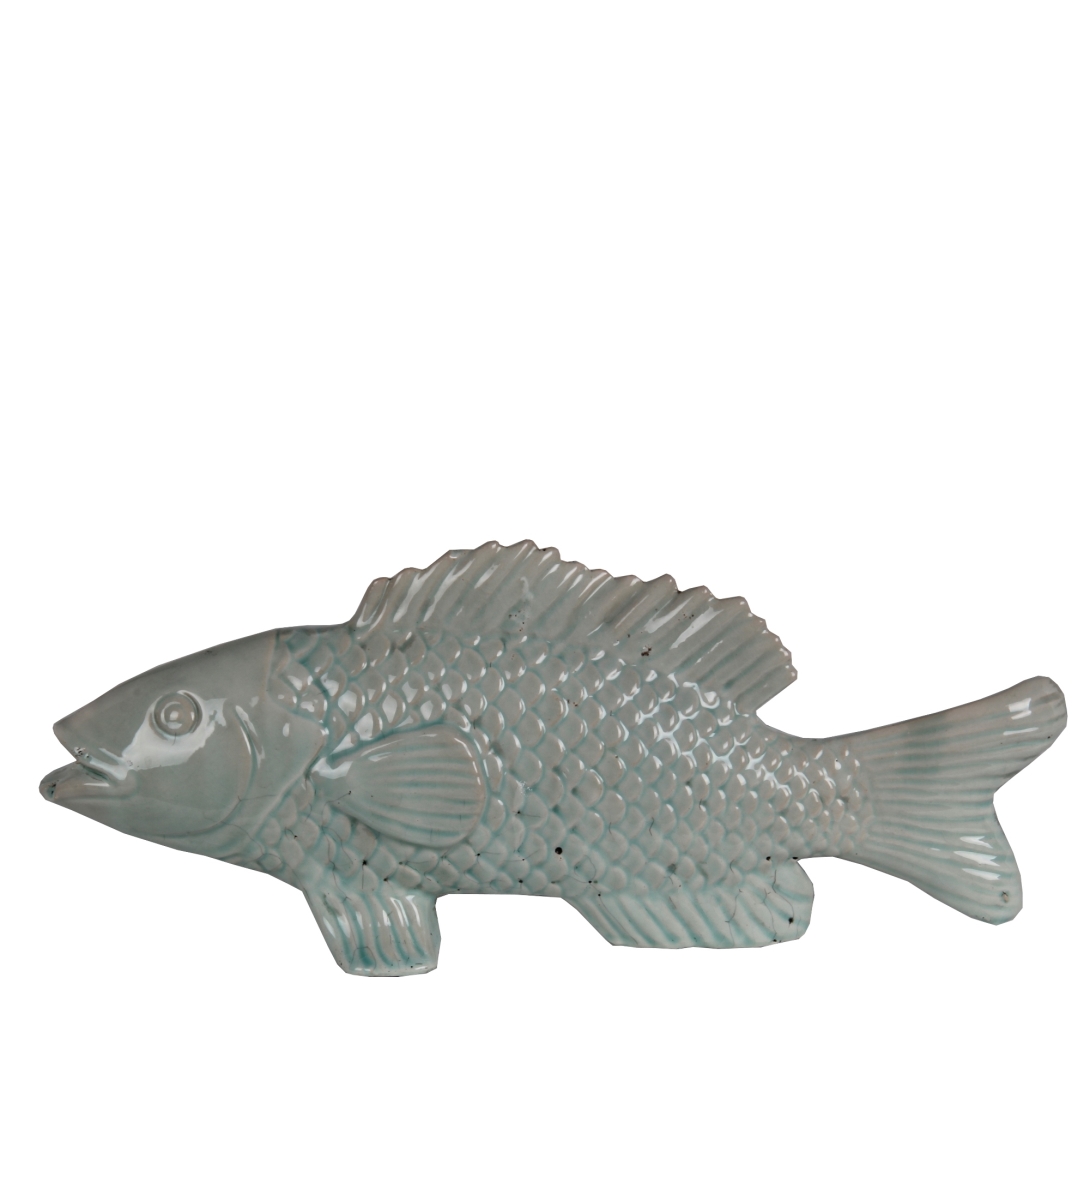 66997 16.5 X 3 X 6.5 In. Ceramic Fish Statue, Blue